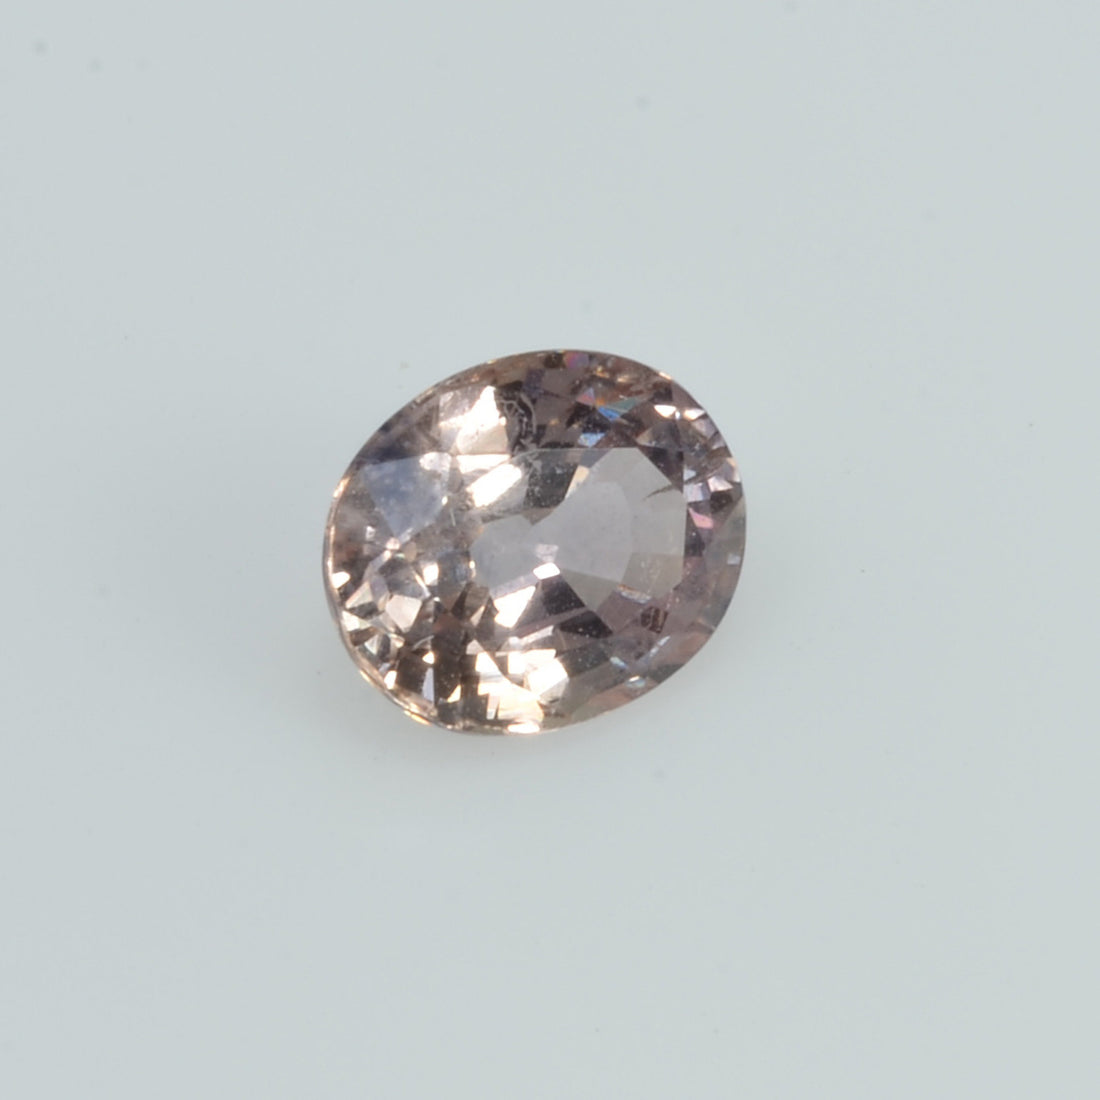 0.76 Cts Natural Peach Sapphire Loose Gemstone Oval Cut - Thai Gems Export Ltd.